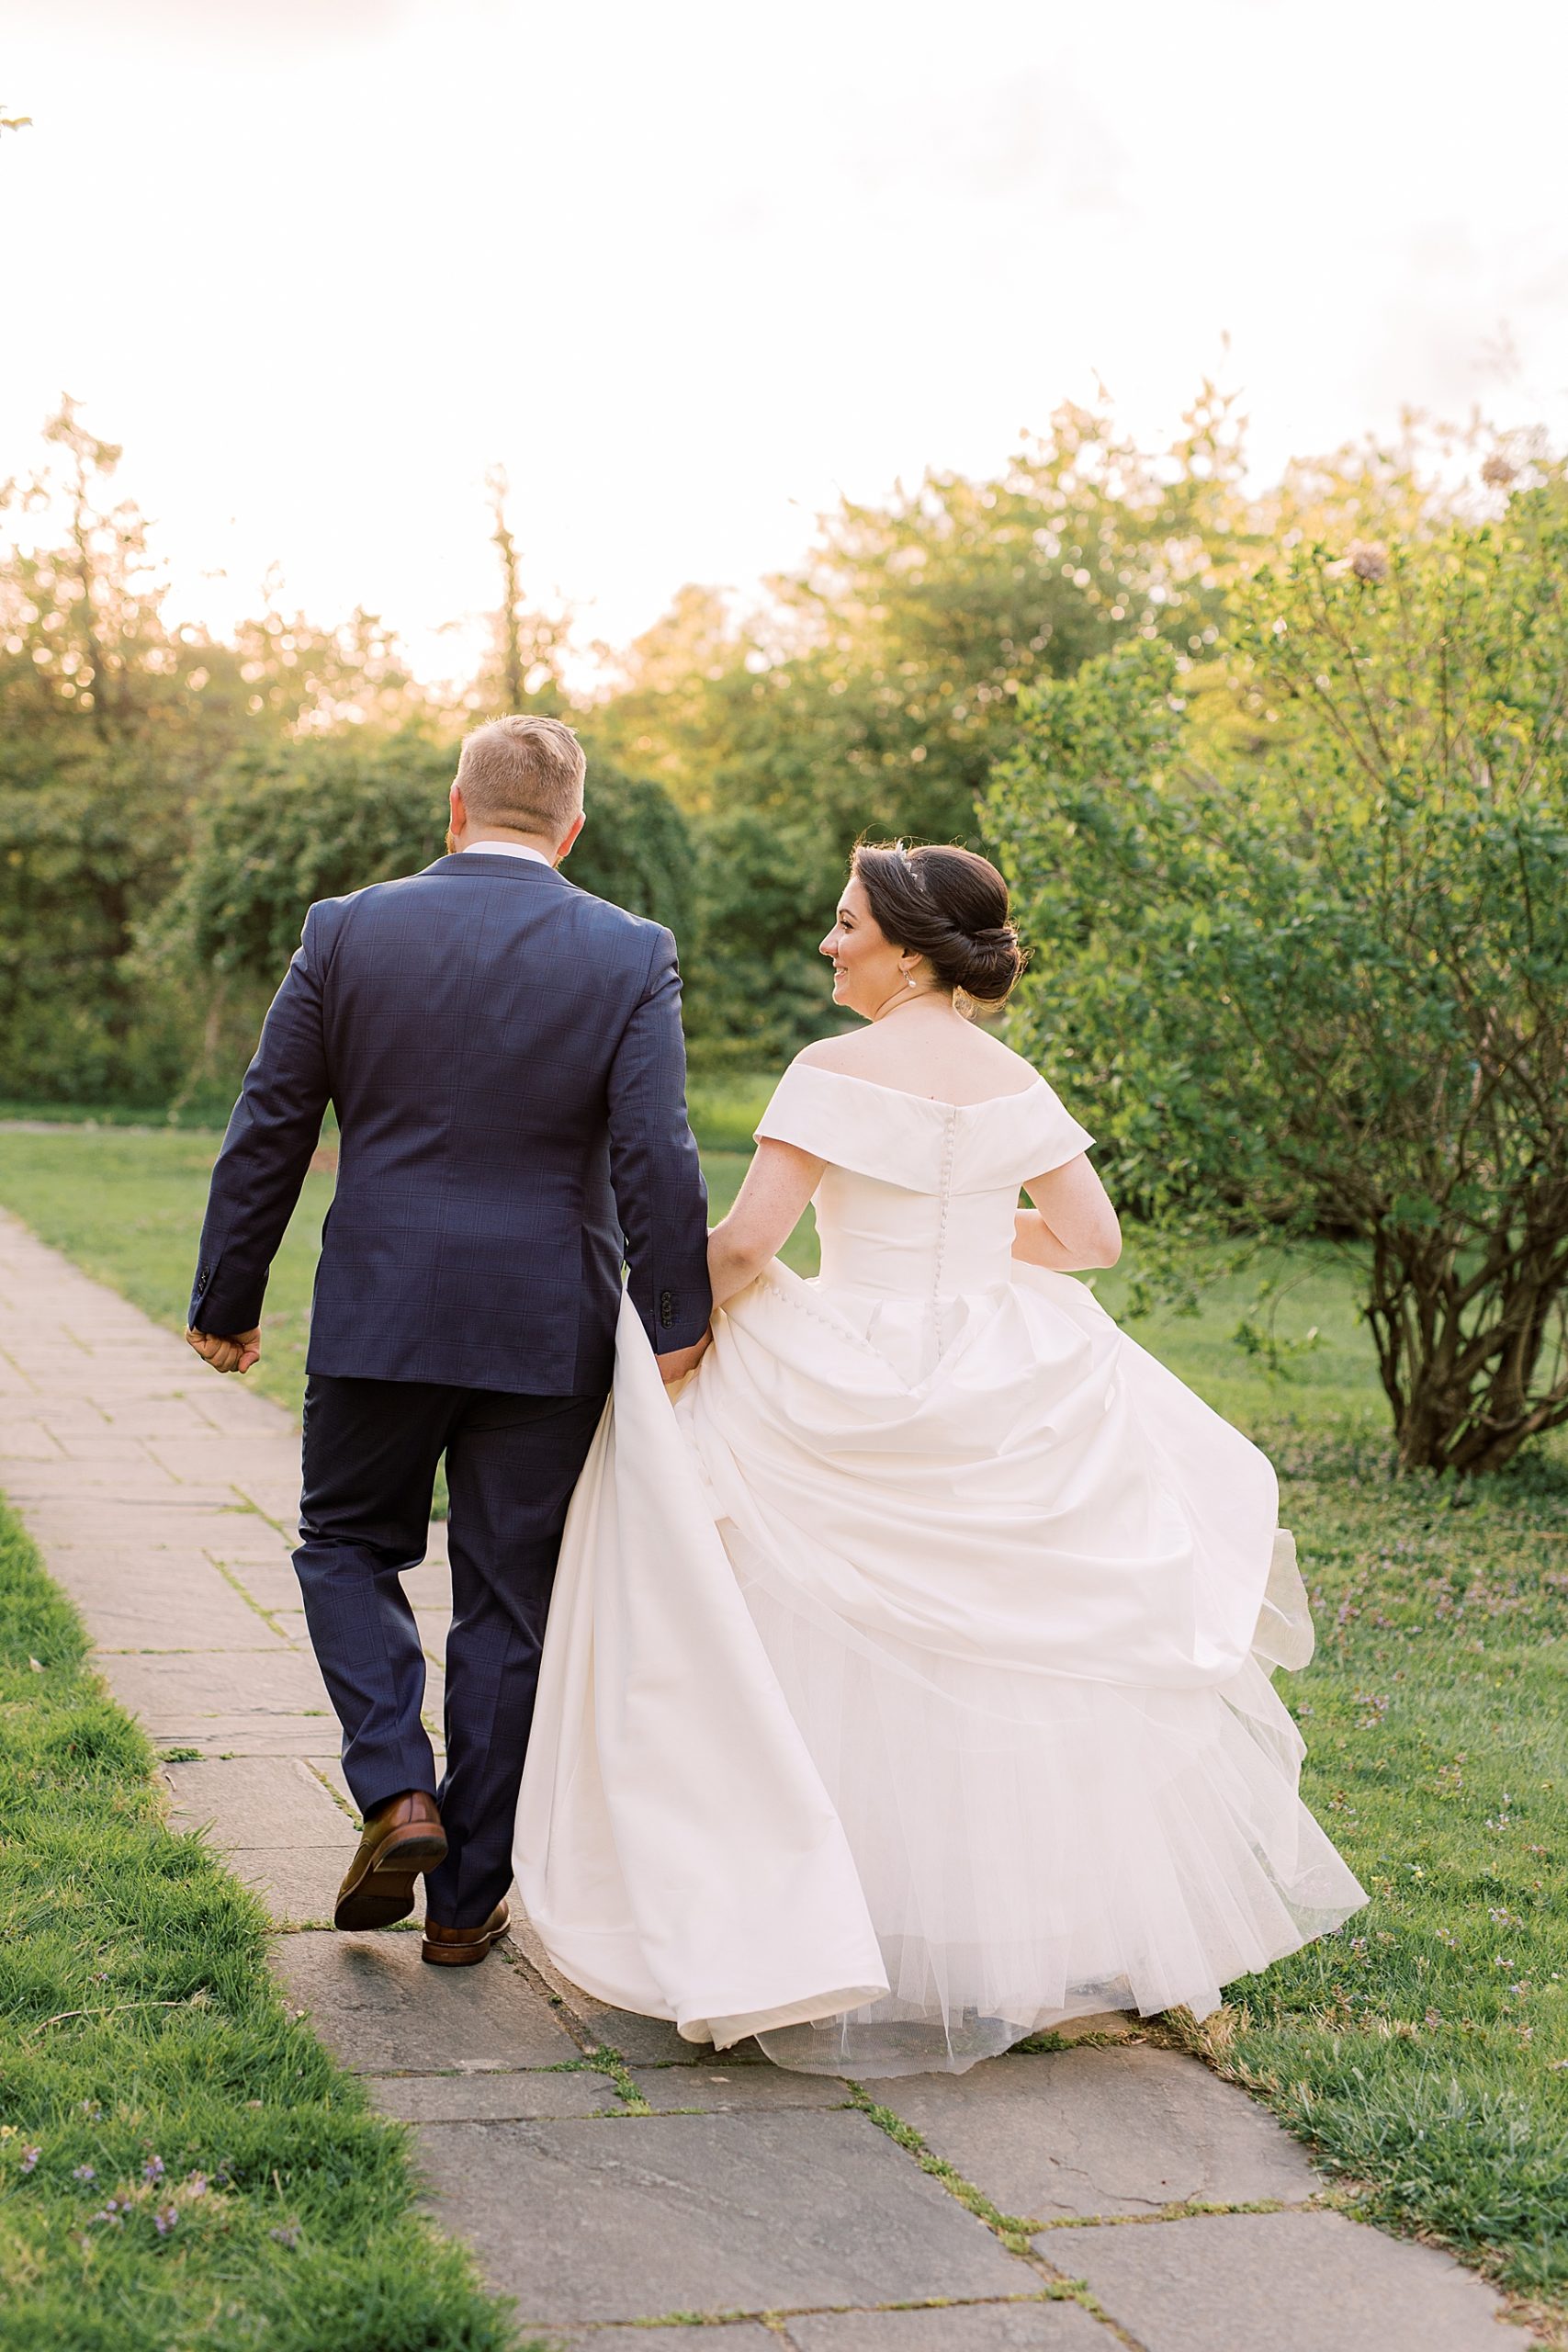 couple walks on brick path while bride carries skirt of wedding dress